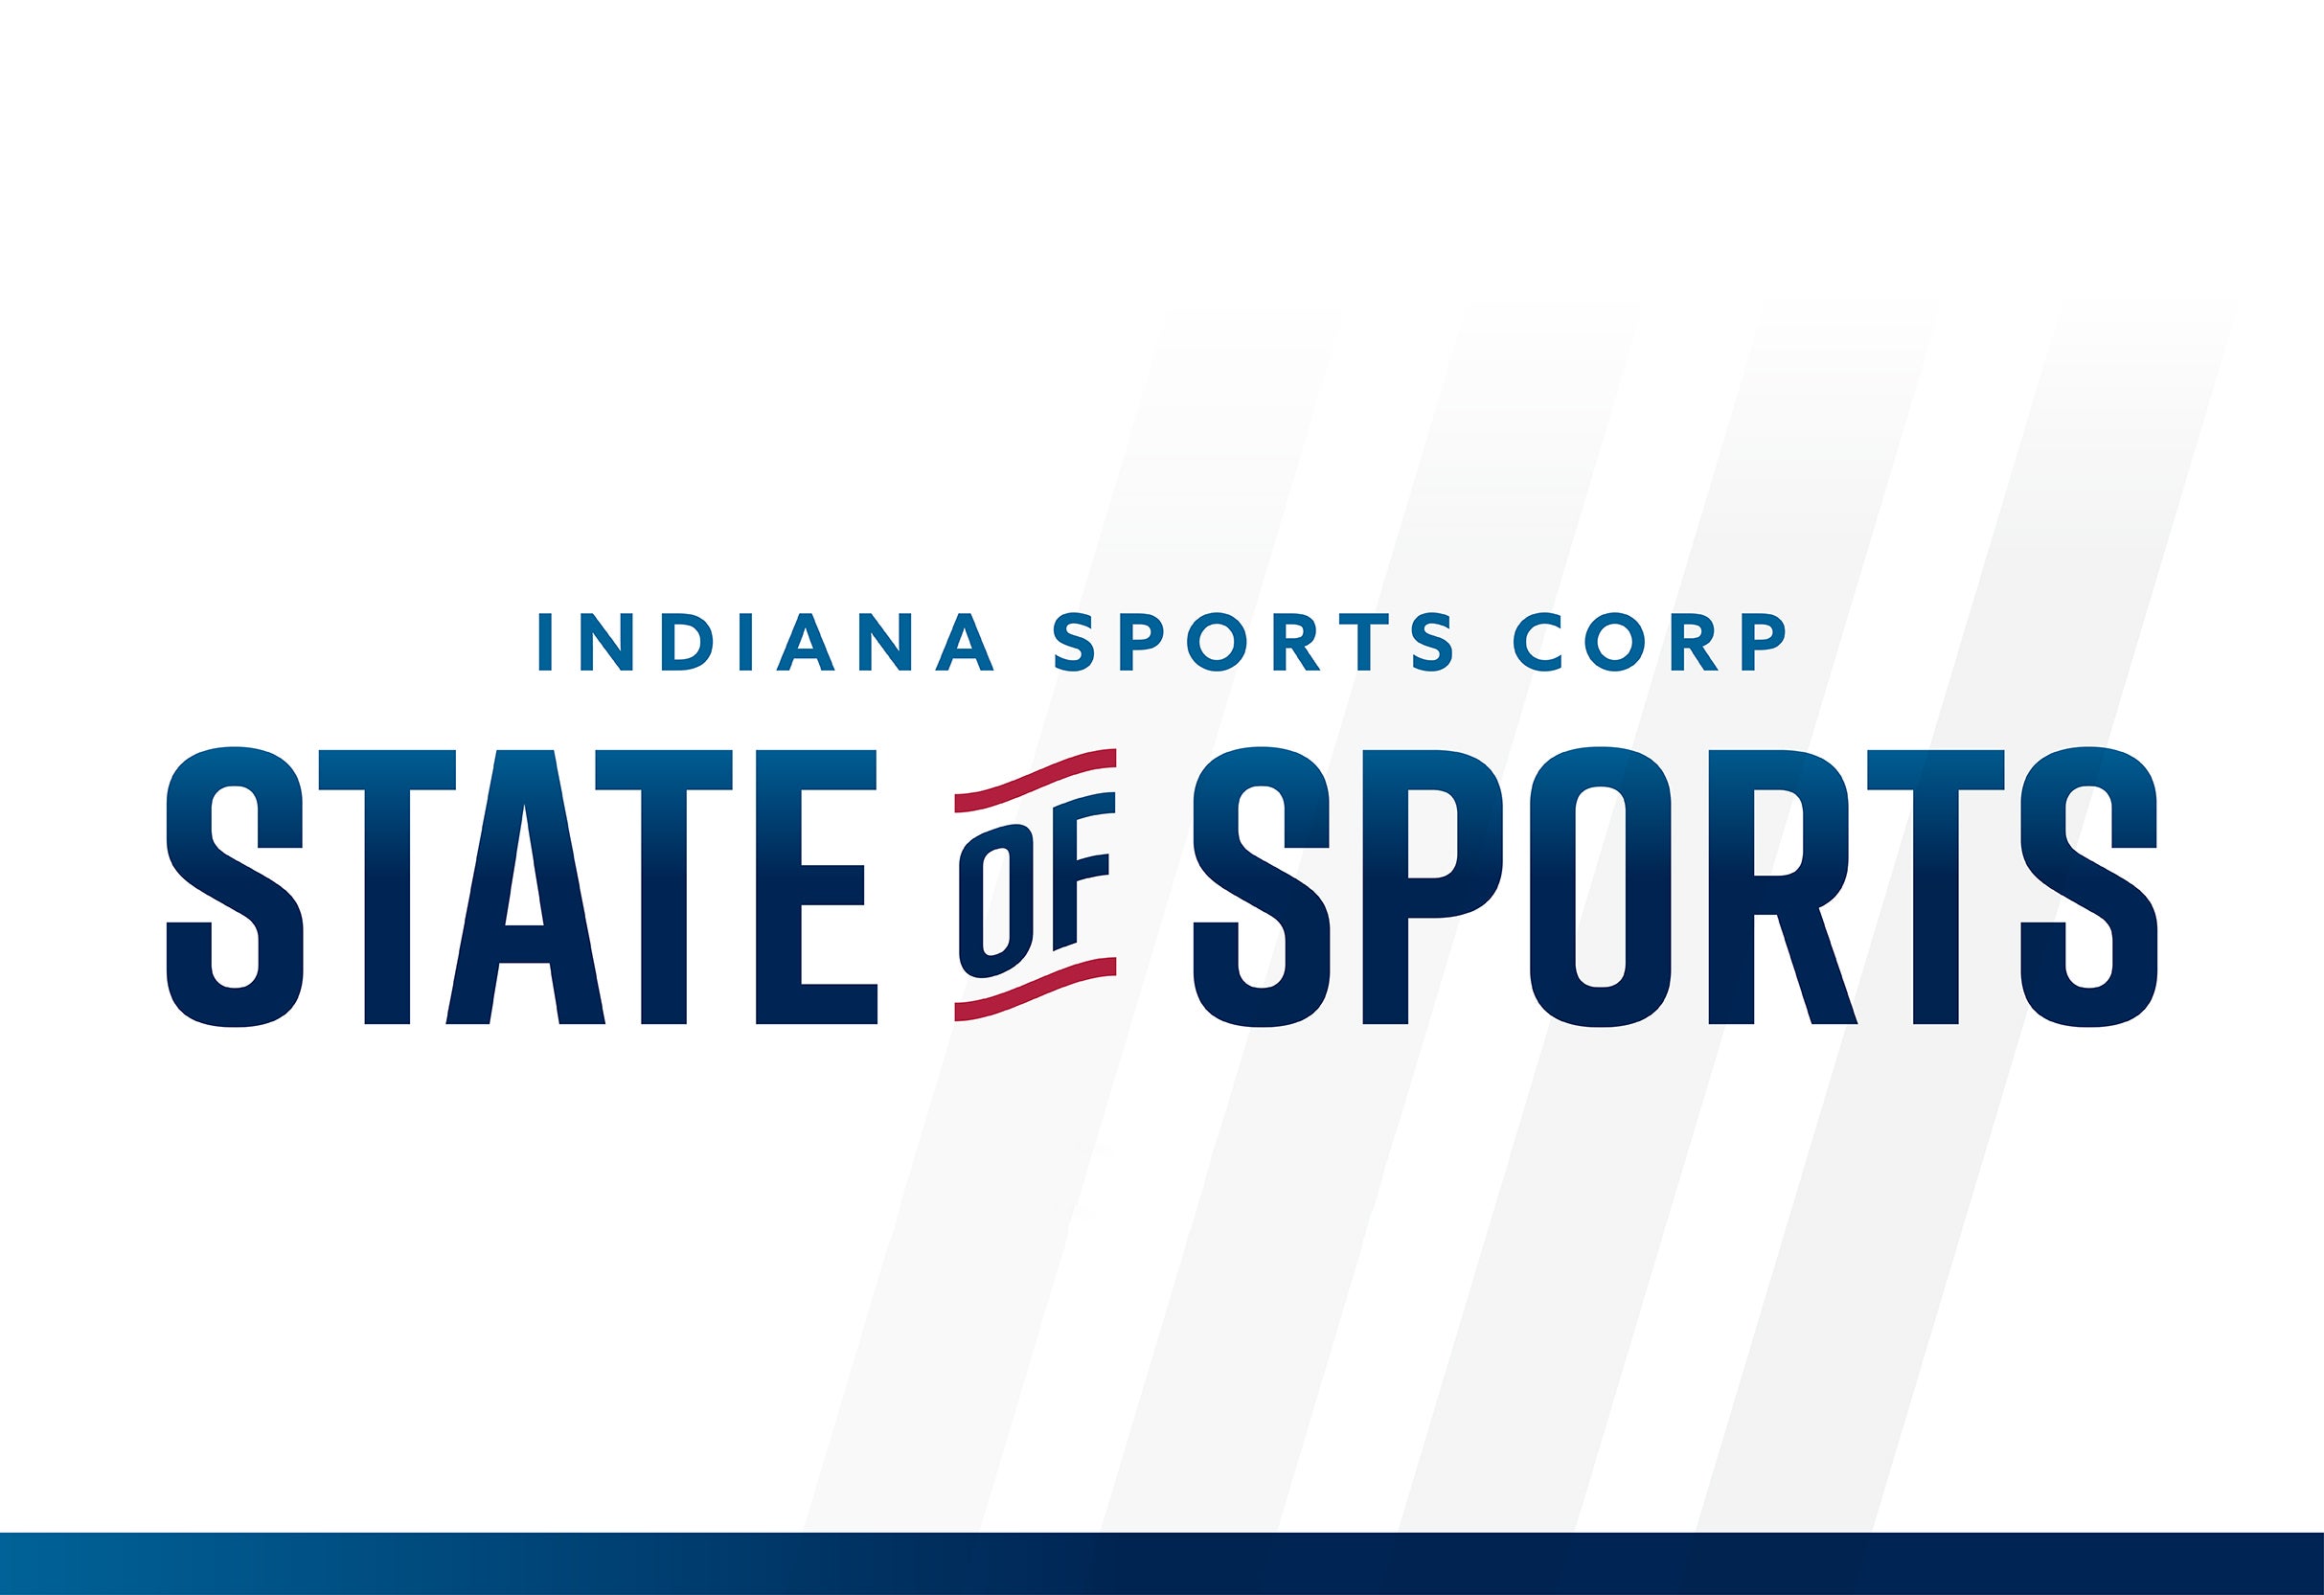 Indiana Sports Corp State of Sports presale information on freepresalepasswords.com